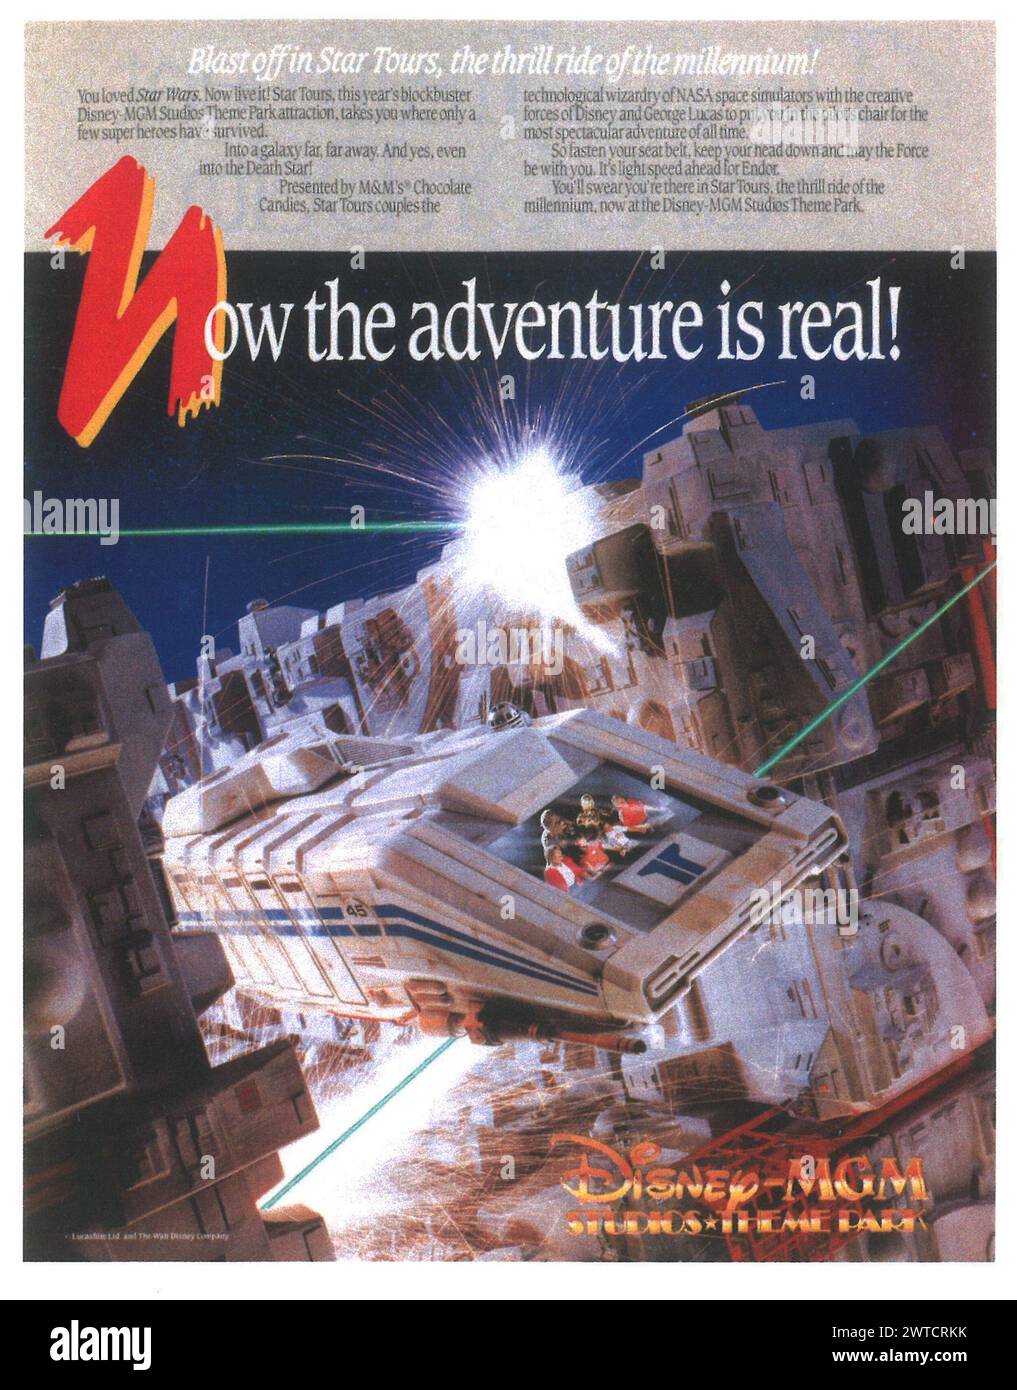 1990 Disney's-MGM Studio Theme Park Attraktion Ad Stockfoto